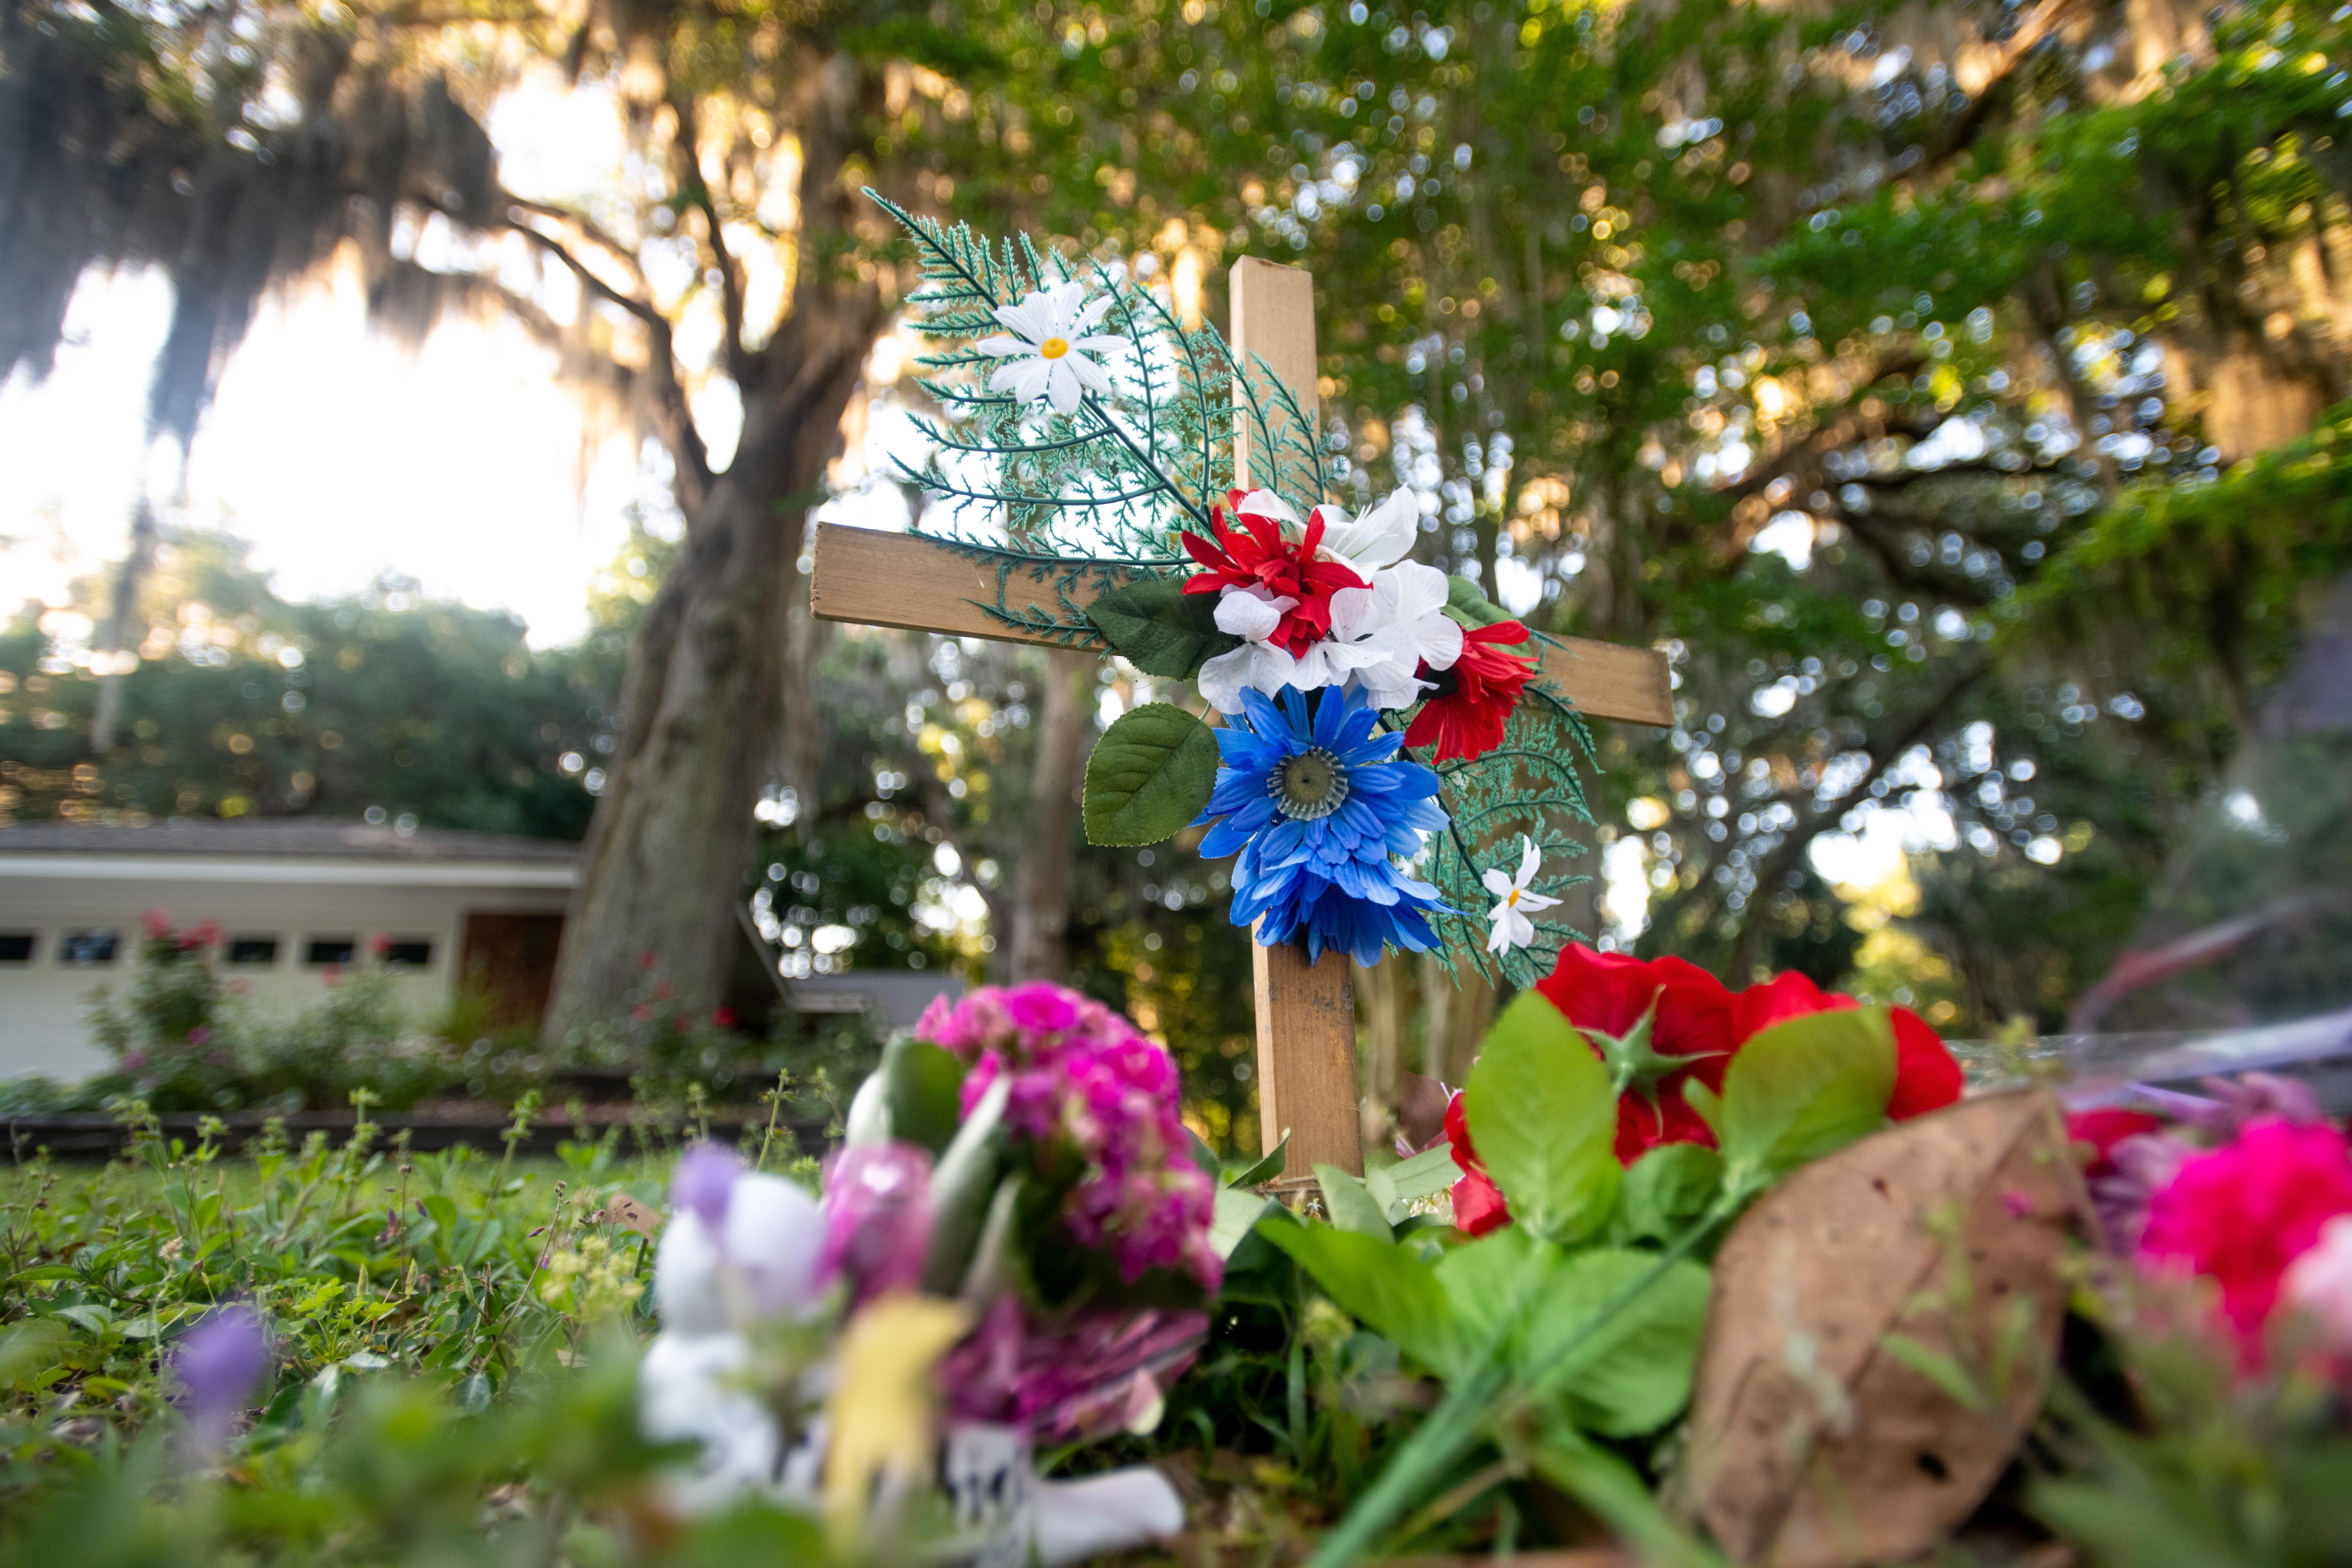 A commemorative cross with flowers in the Georgia neighborhood where Ahmaud Arbery was shot and killed.